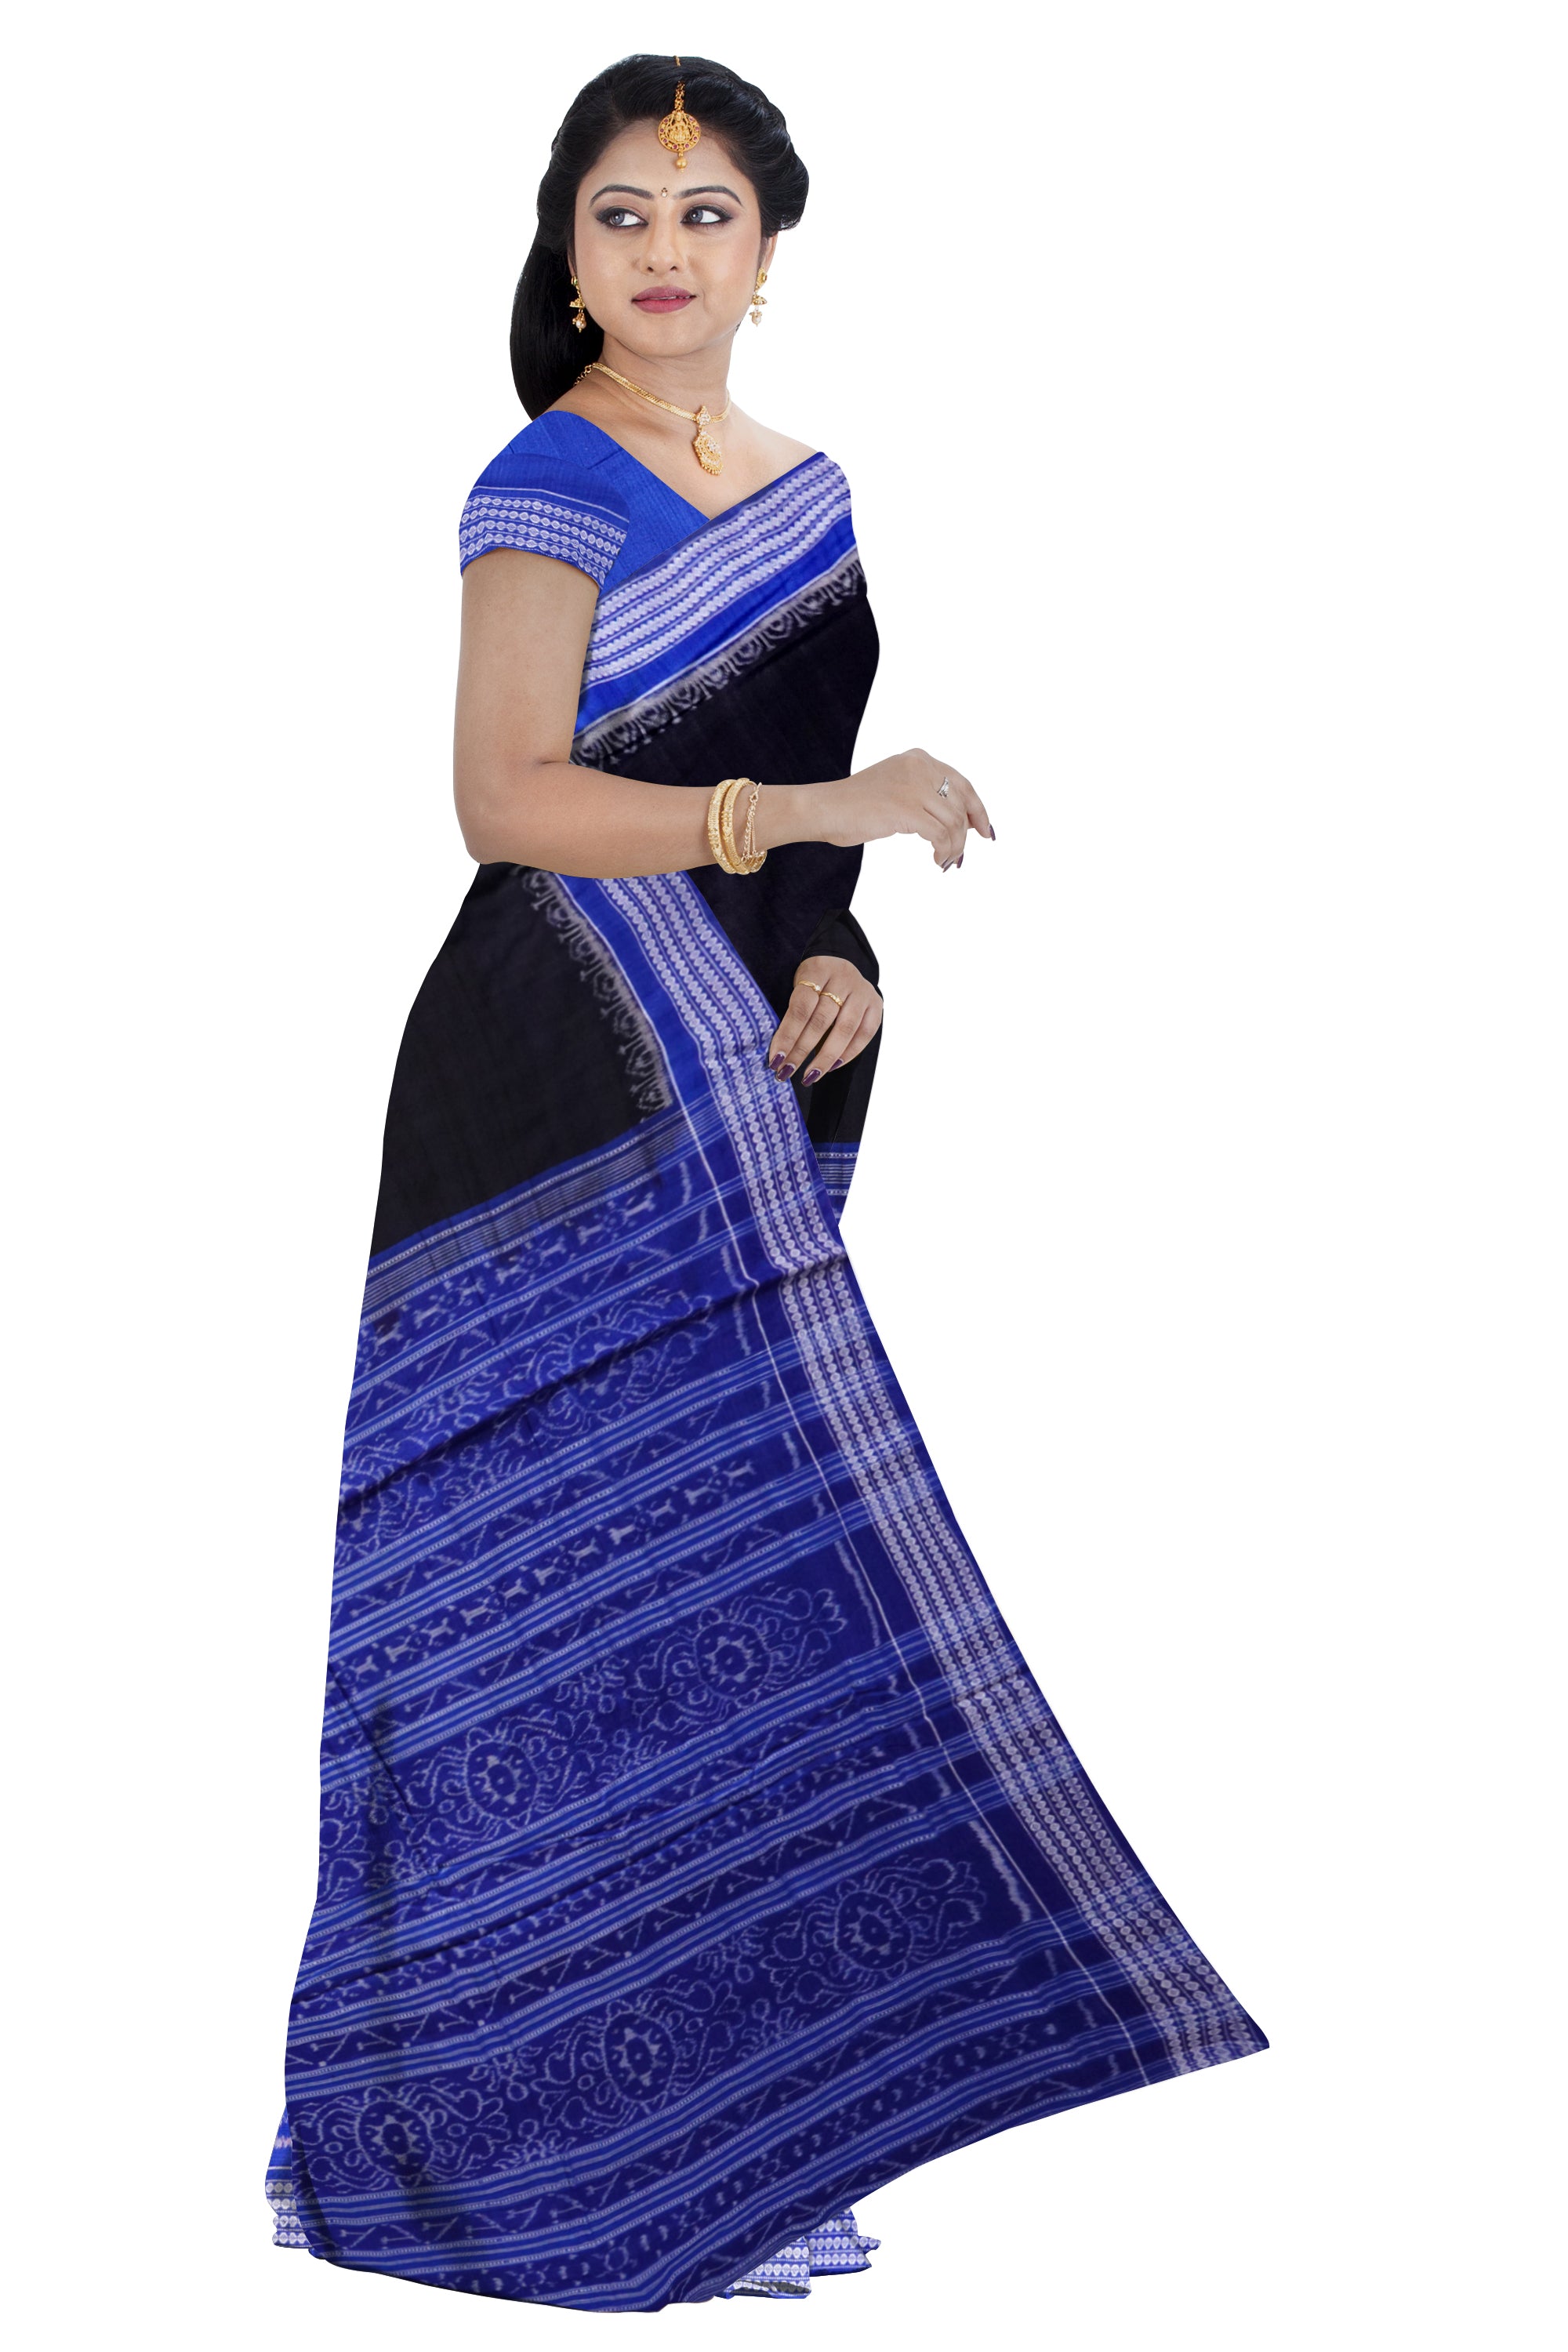 Sambalpuri handloom  pure cotton saree is black and sky color. - Koshali Arts & Crafts Enterprise